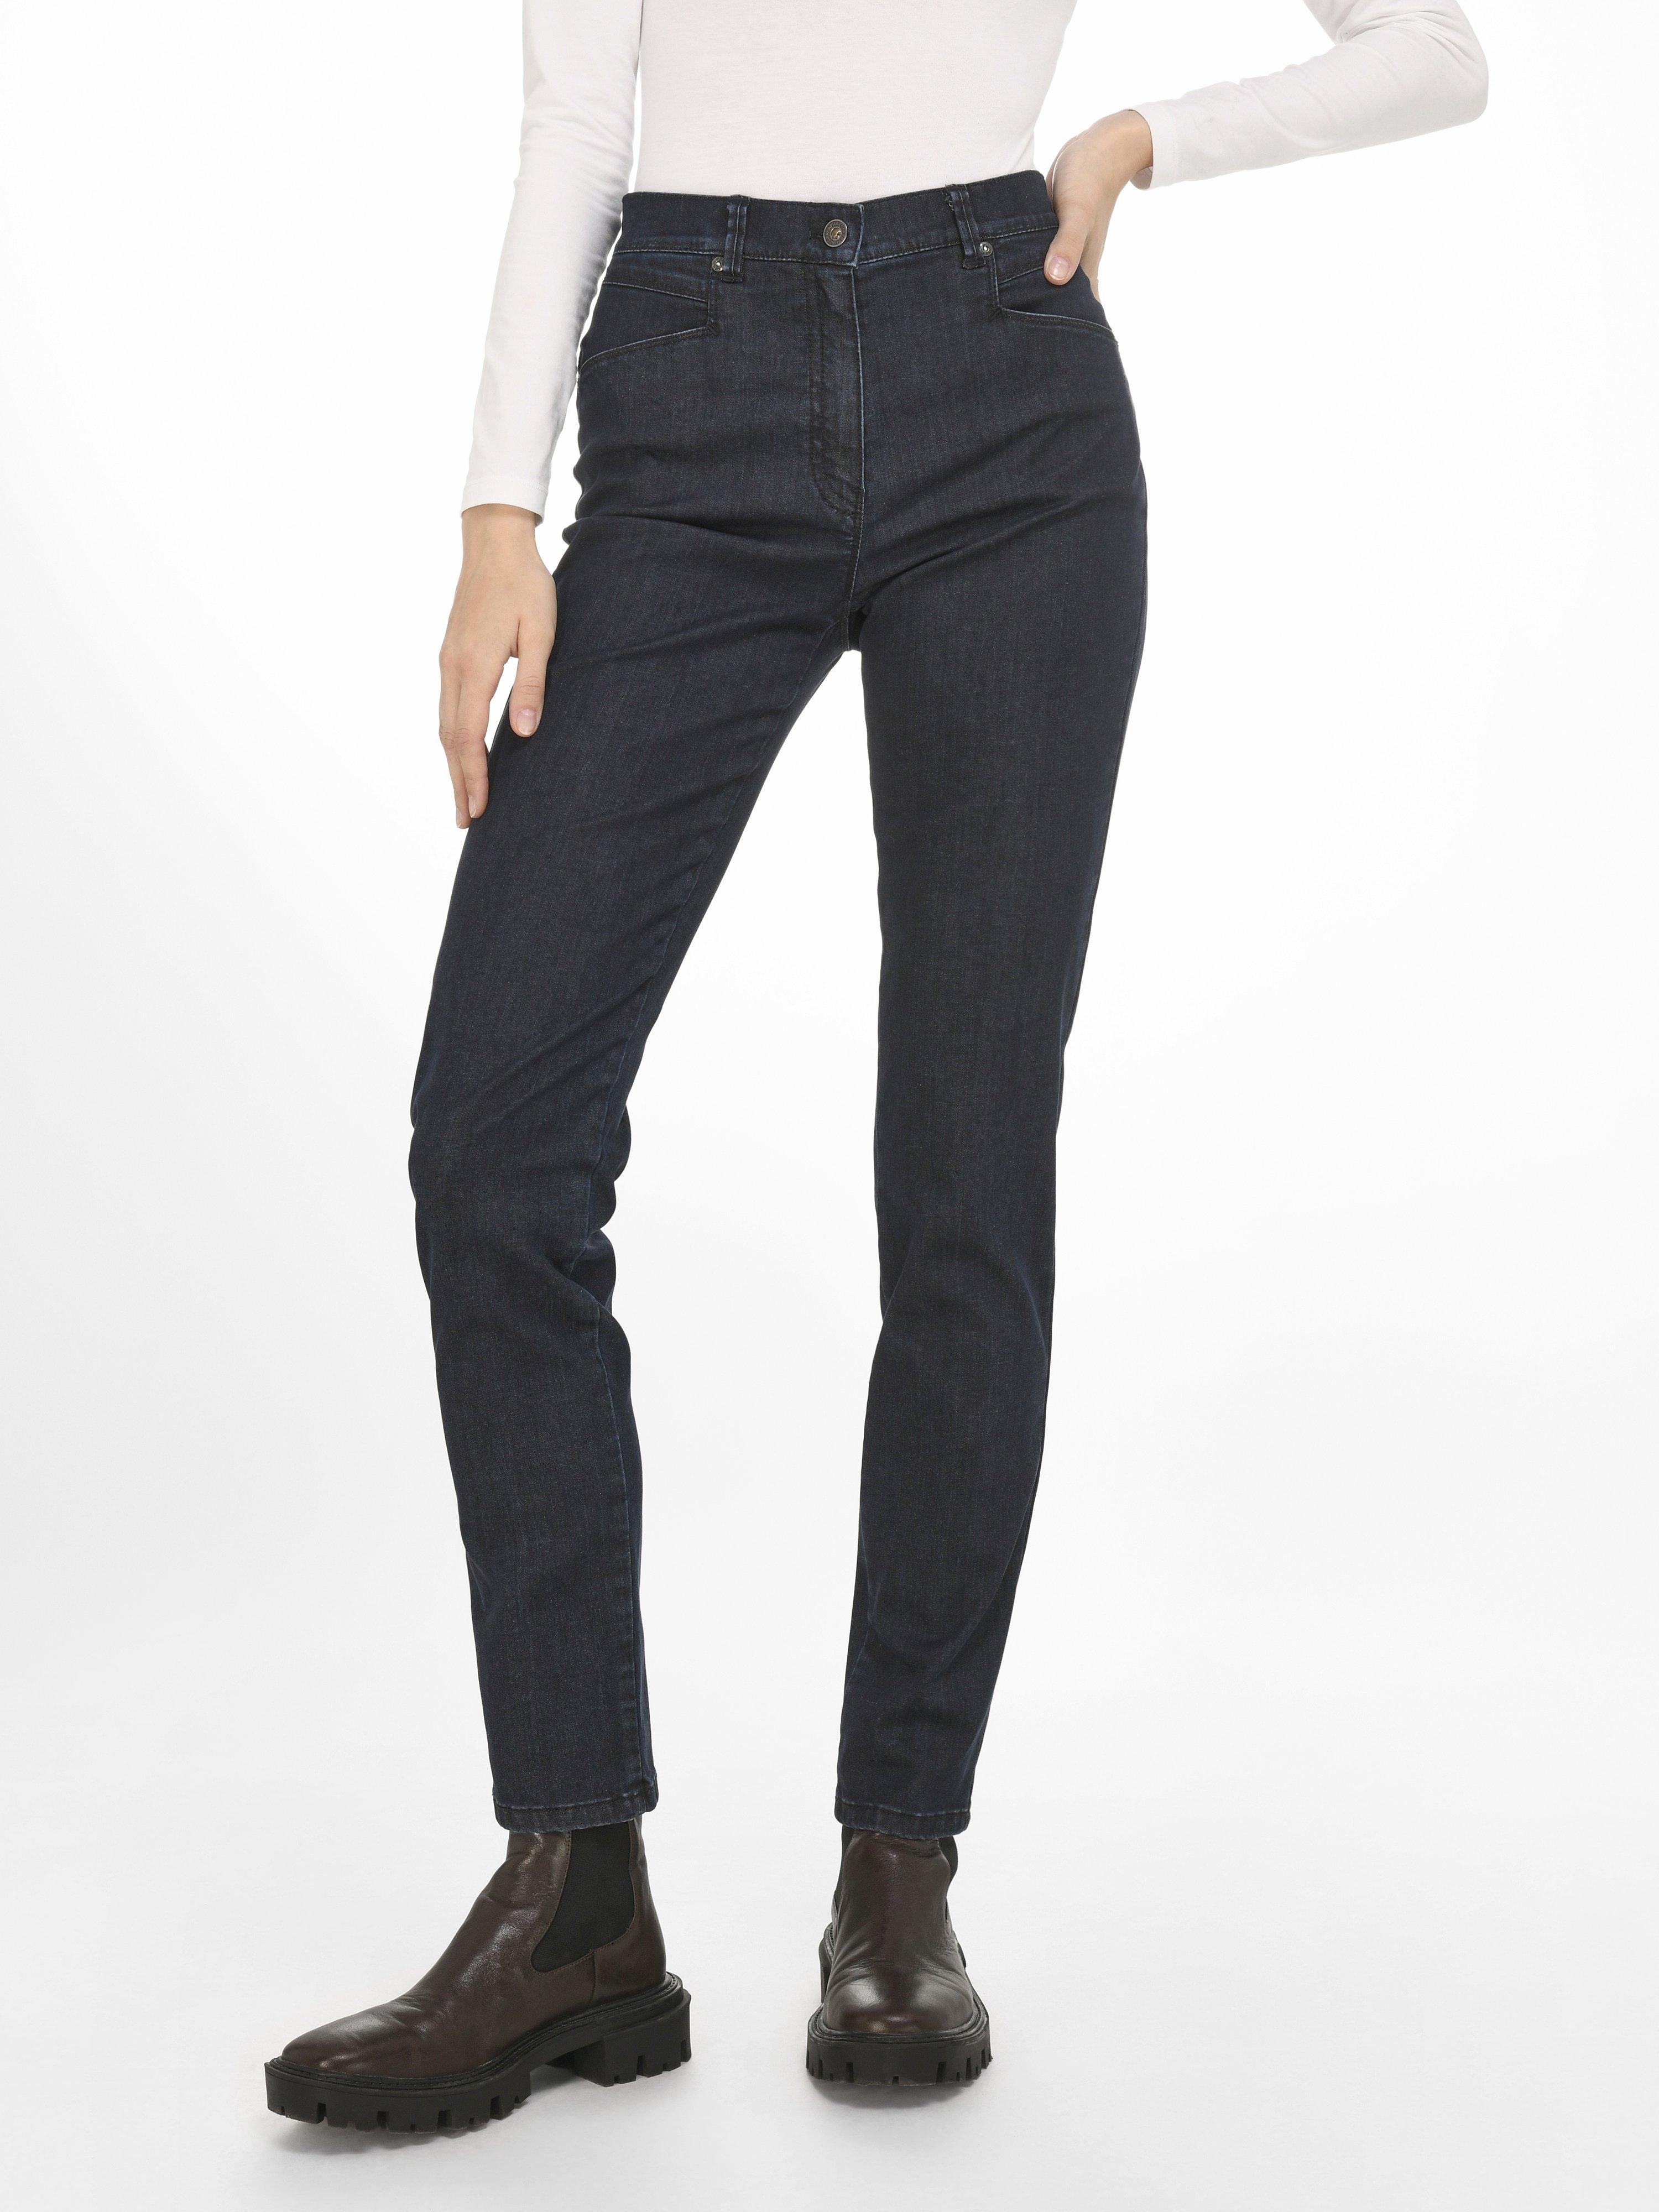 Raphaela by Brax - Corrigerende Comfort Plus-jeans model Caren